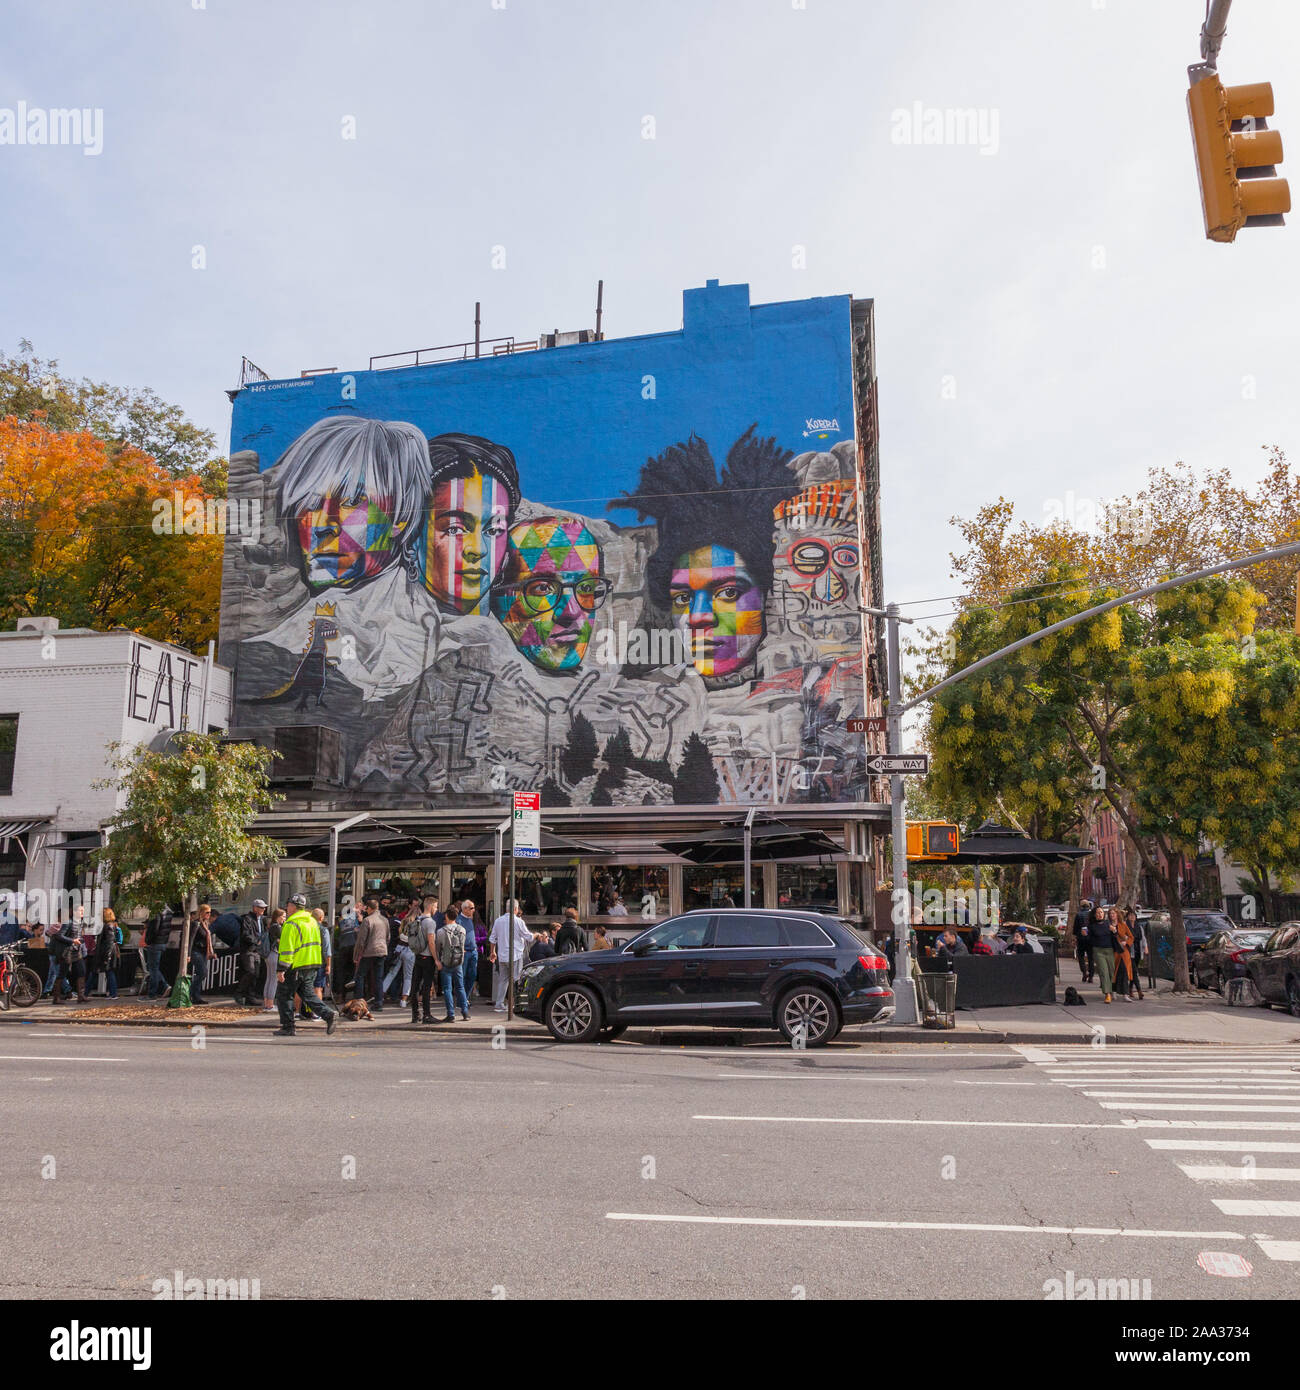 Kobra’s Mount Rushmore mural, The Empire Diner, 10th Avenue, Chelsea, New York City, New York, United States of America. Stock Photo